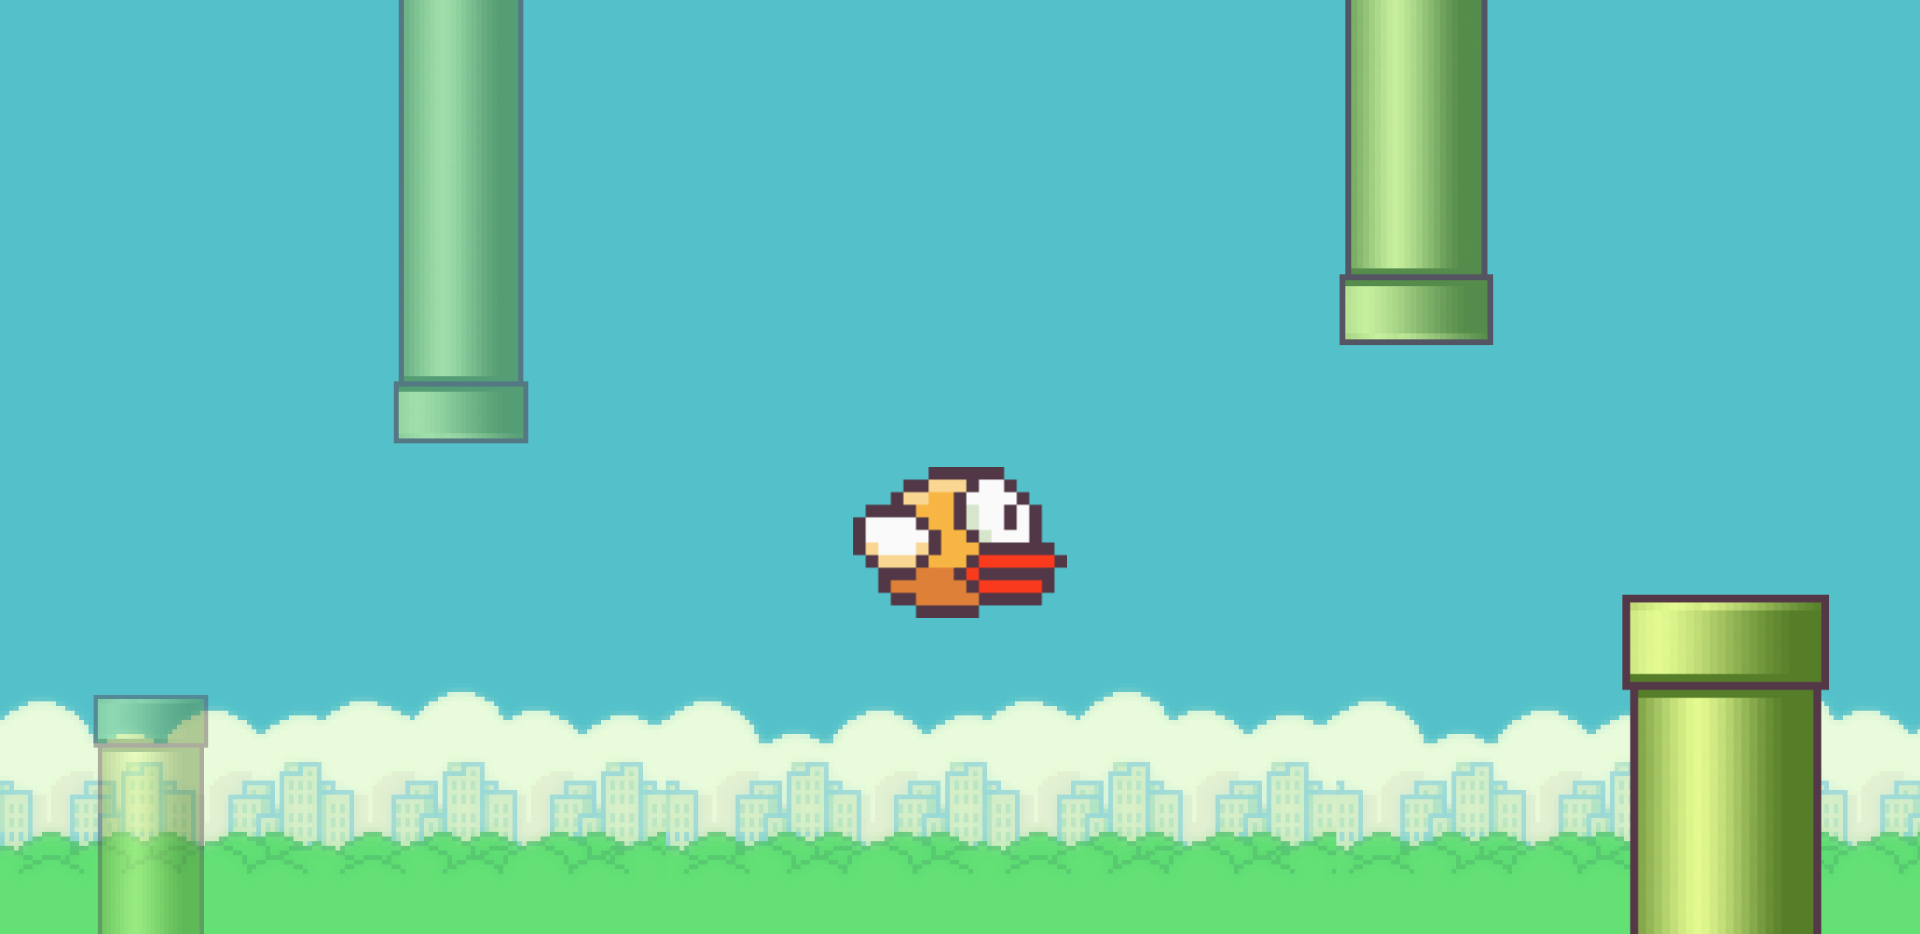 Flappy Bird by 1juancarlos